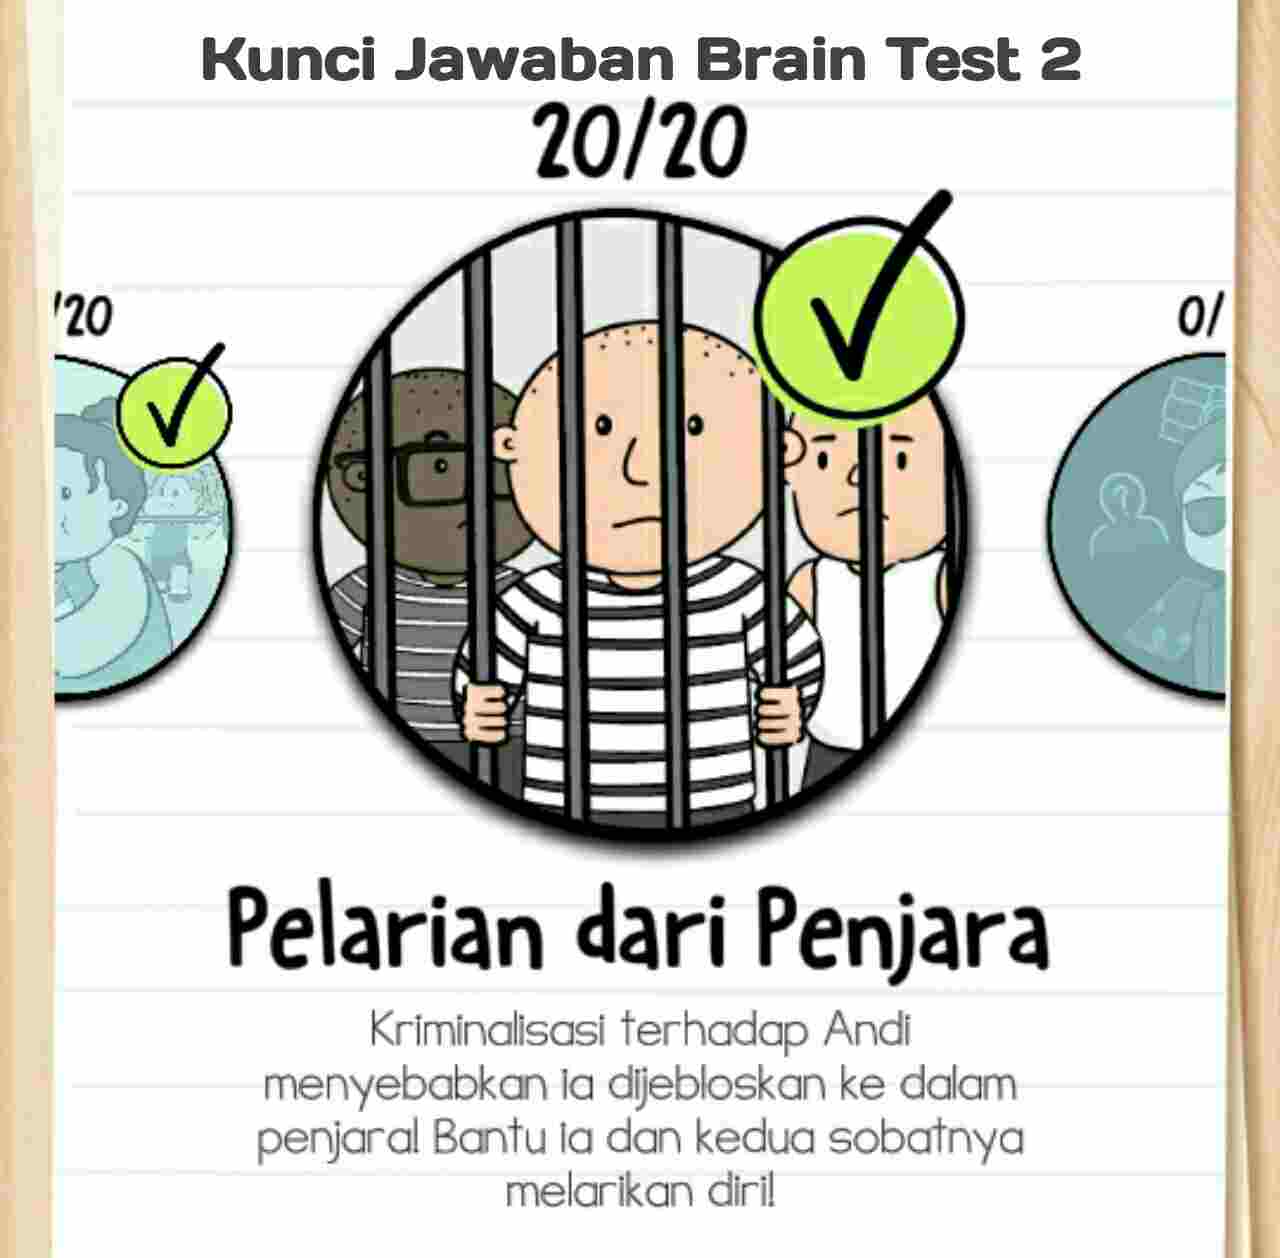 Kunci Jawaban Brain Test 2 Pelarian Dari Penjara Level 1 20